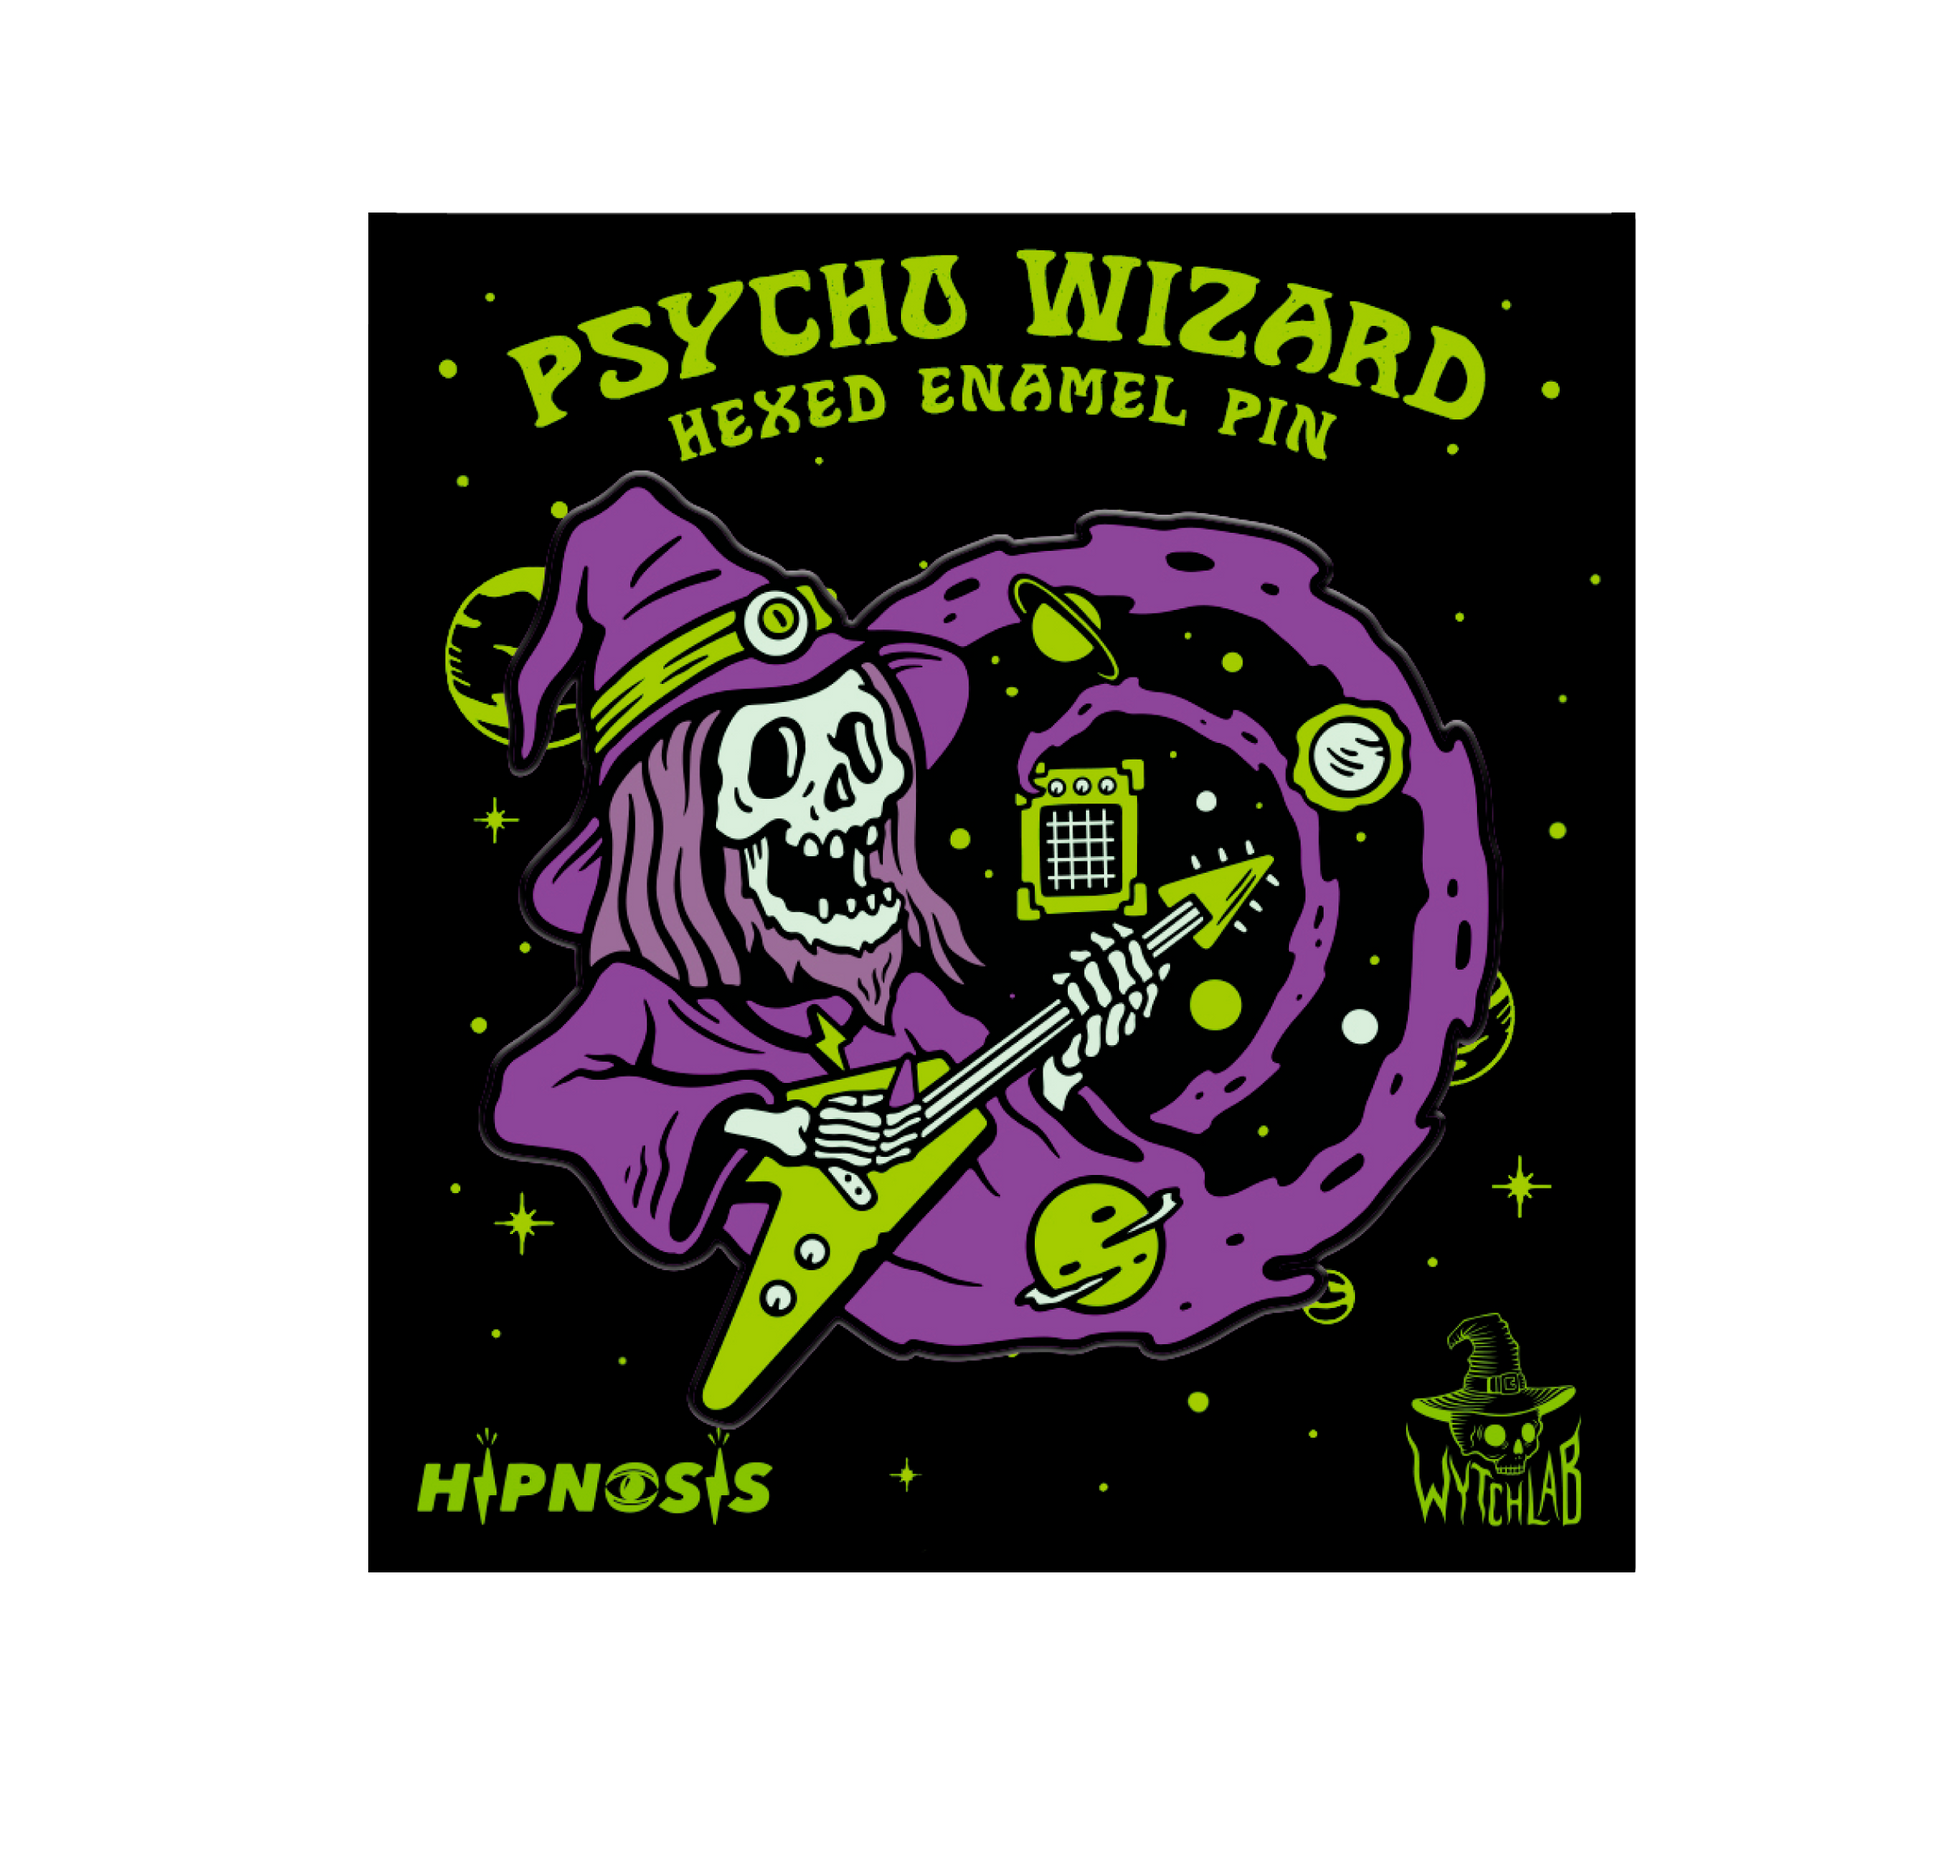 Pin Hipnosis x Wytchlab "Psycho Wizard" - Hipnosis